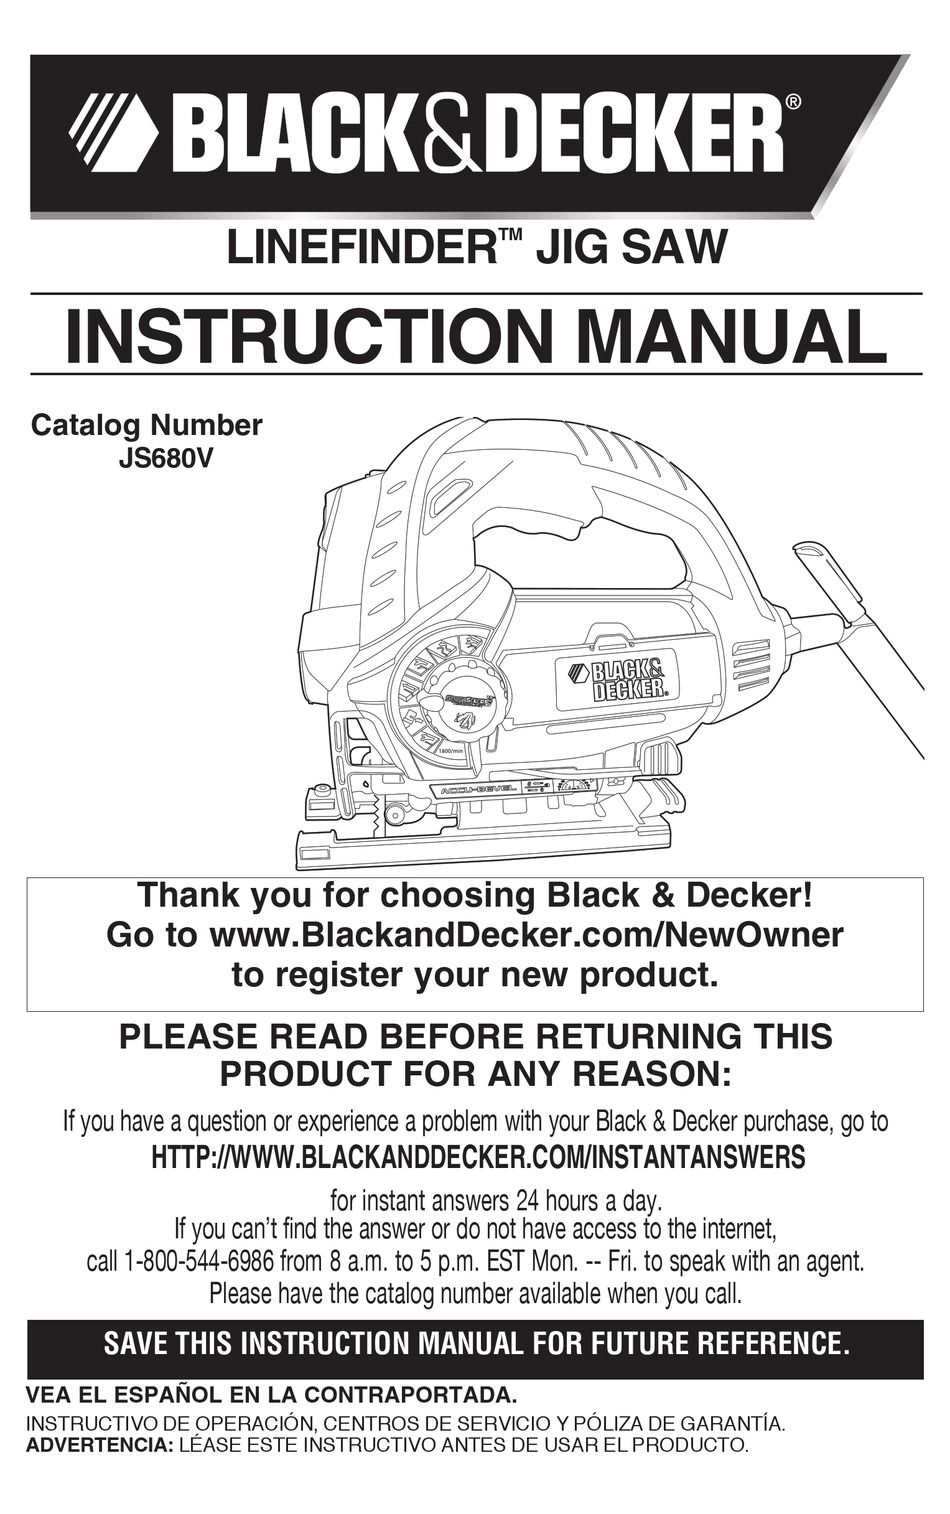 BLACK+DECKER Smart Select Linefinder Orbital Jigsaw, JS670V